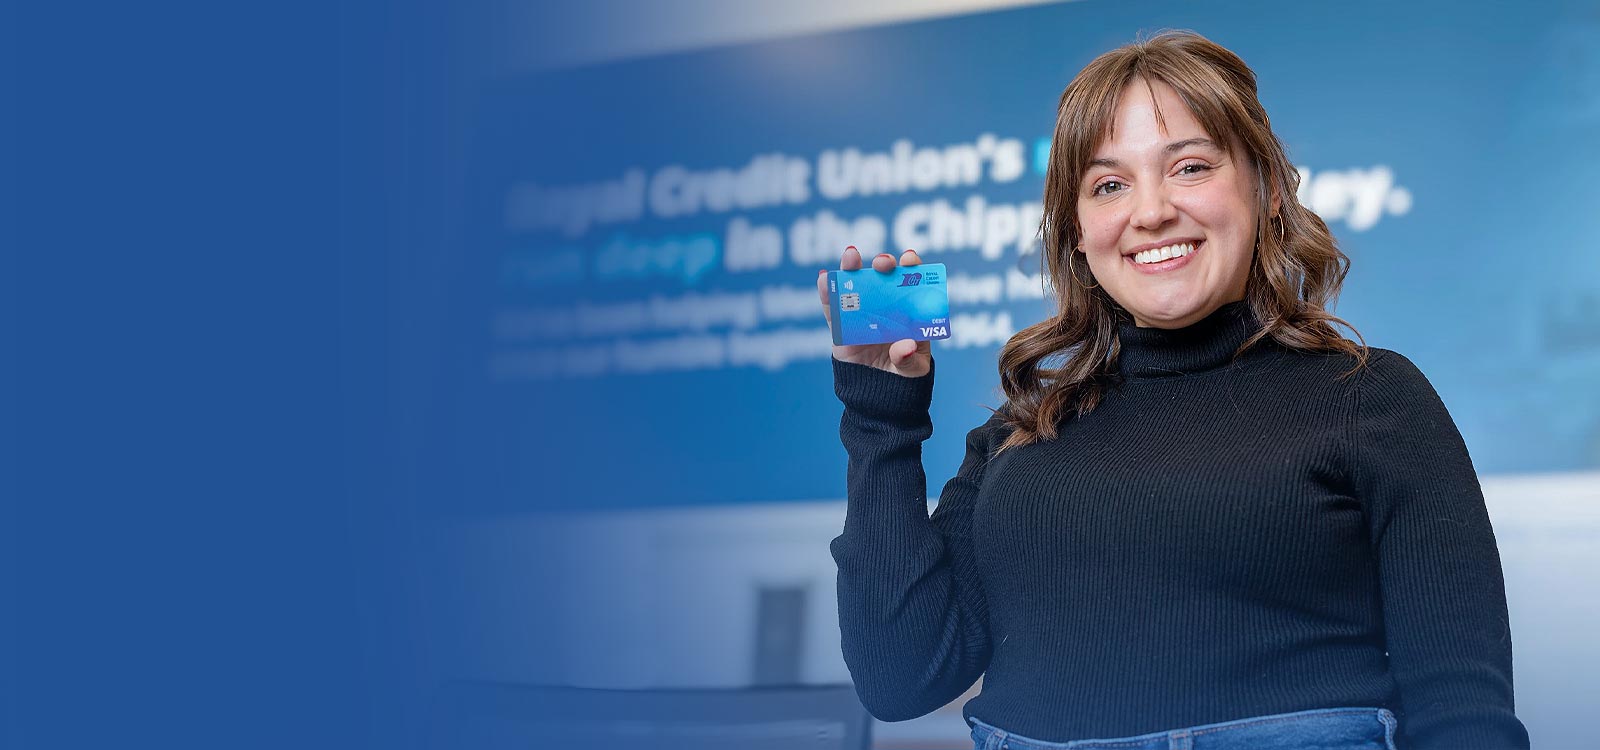 Royal Credit Union Member holding a debit card